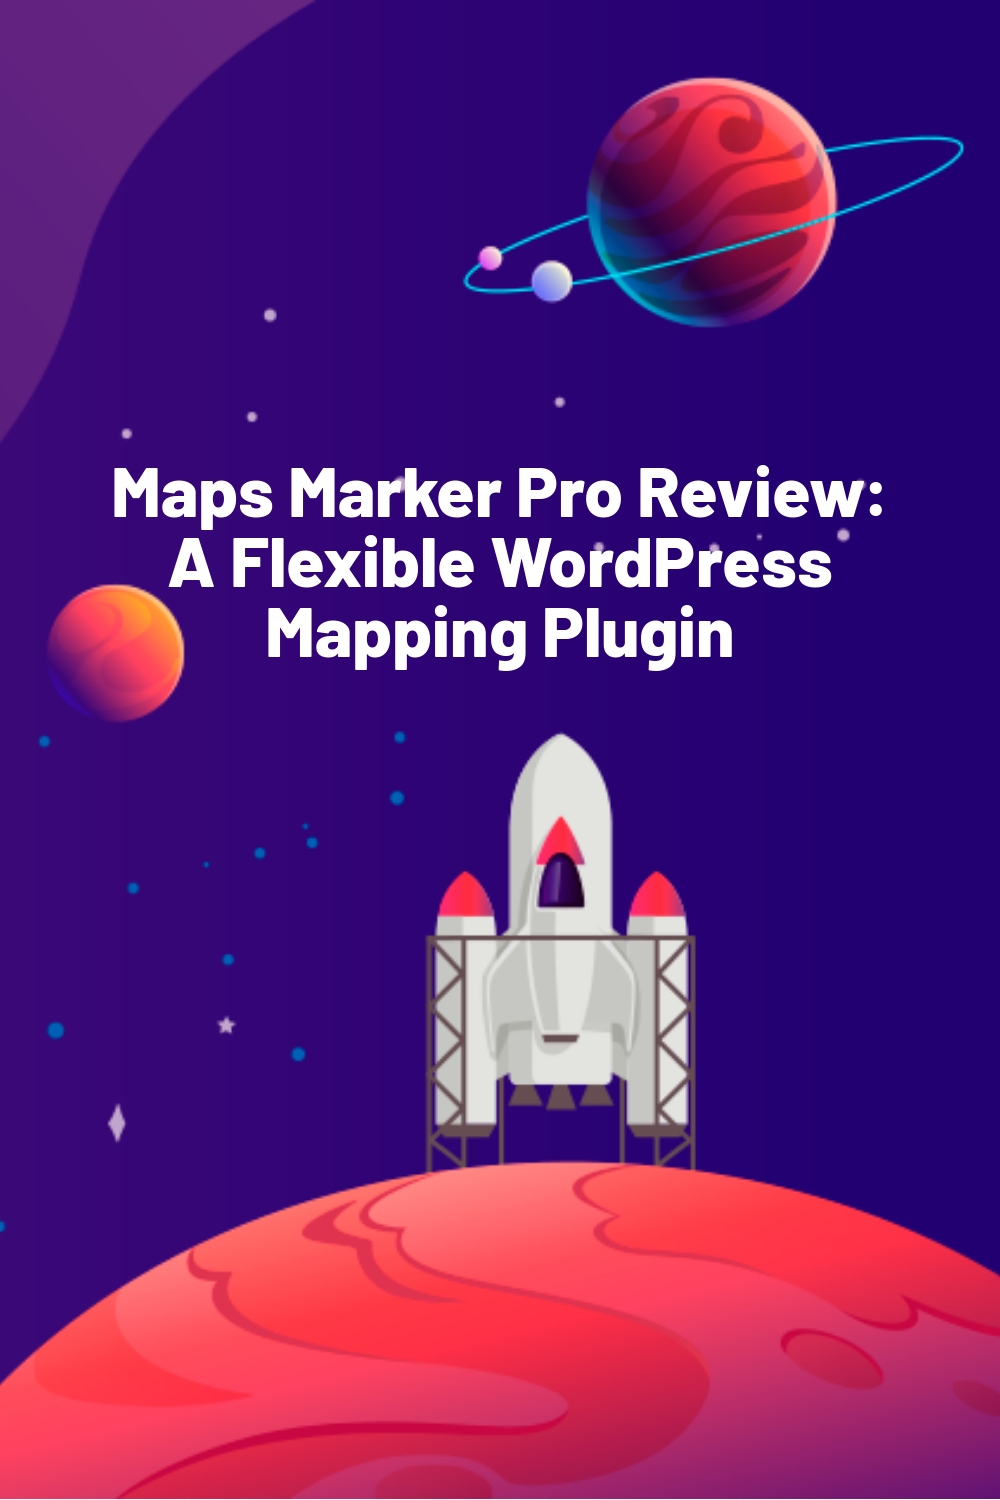 Maps Marker Pro Review: A Flexible WordPress Mapping Plugin